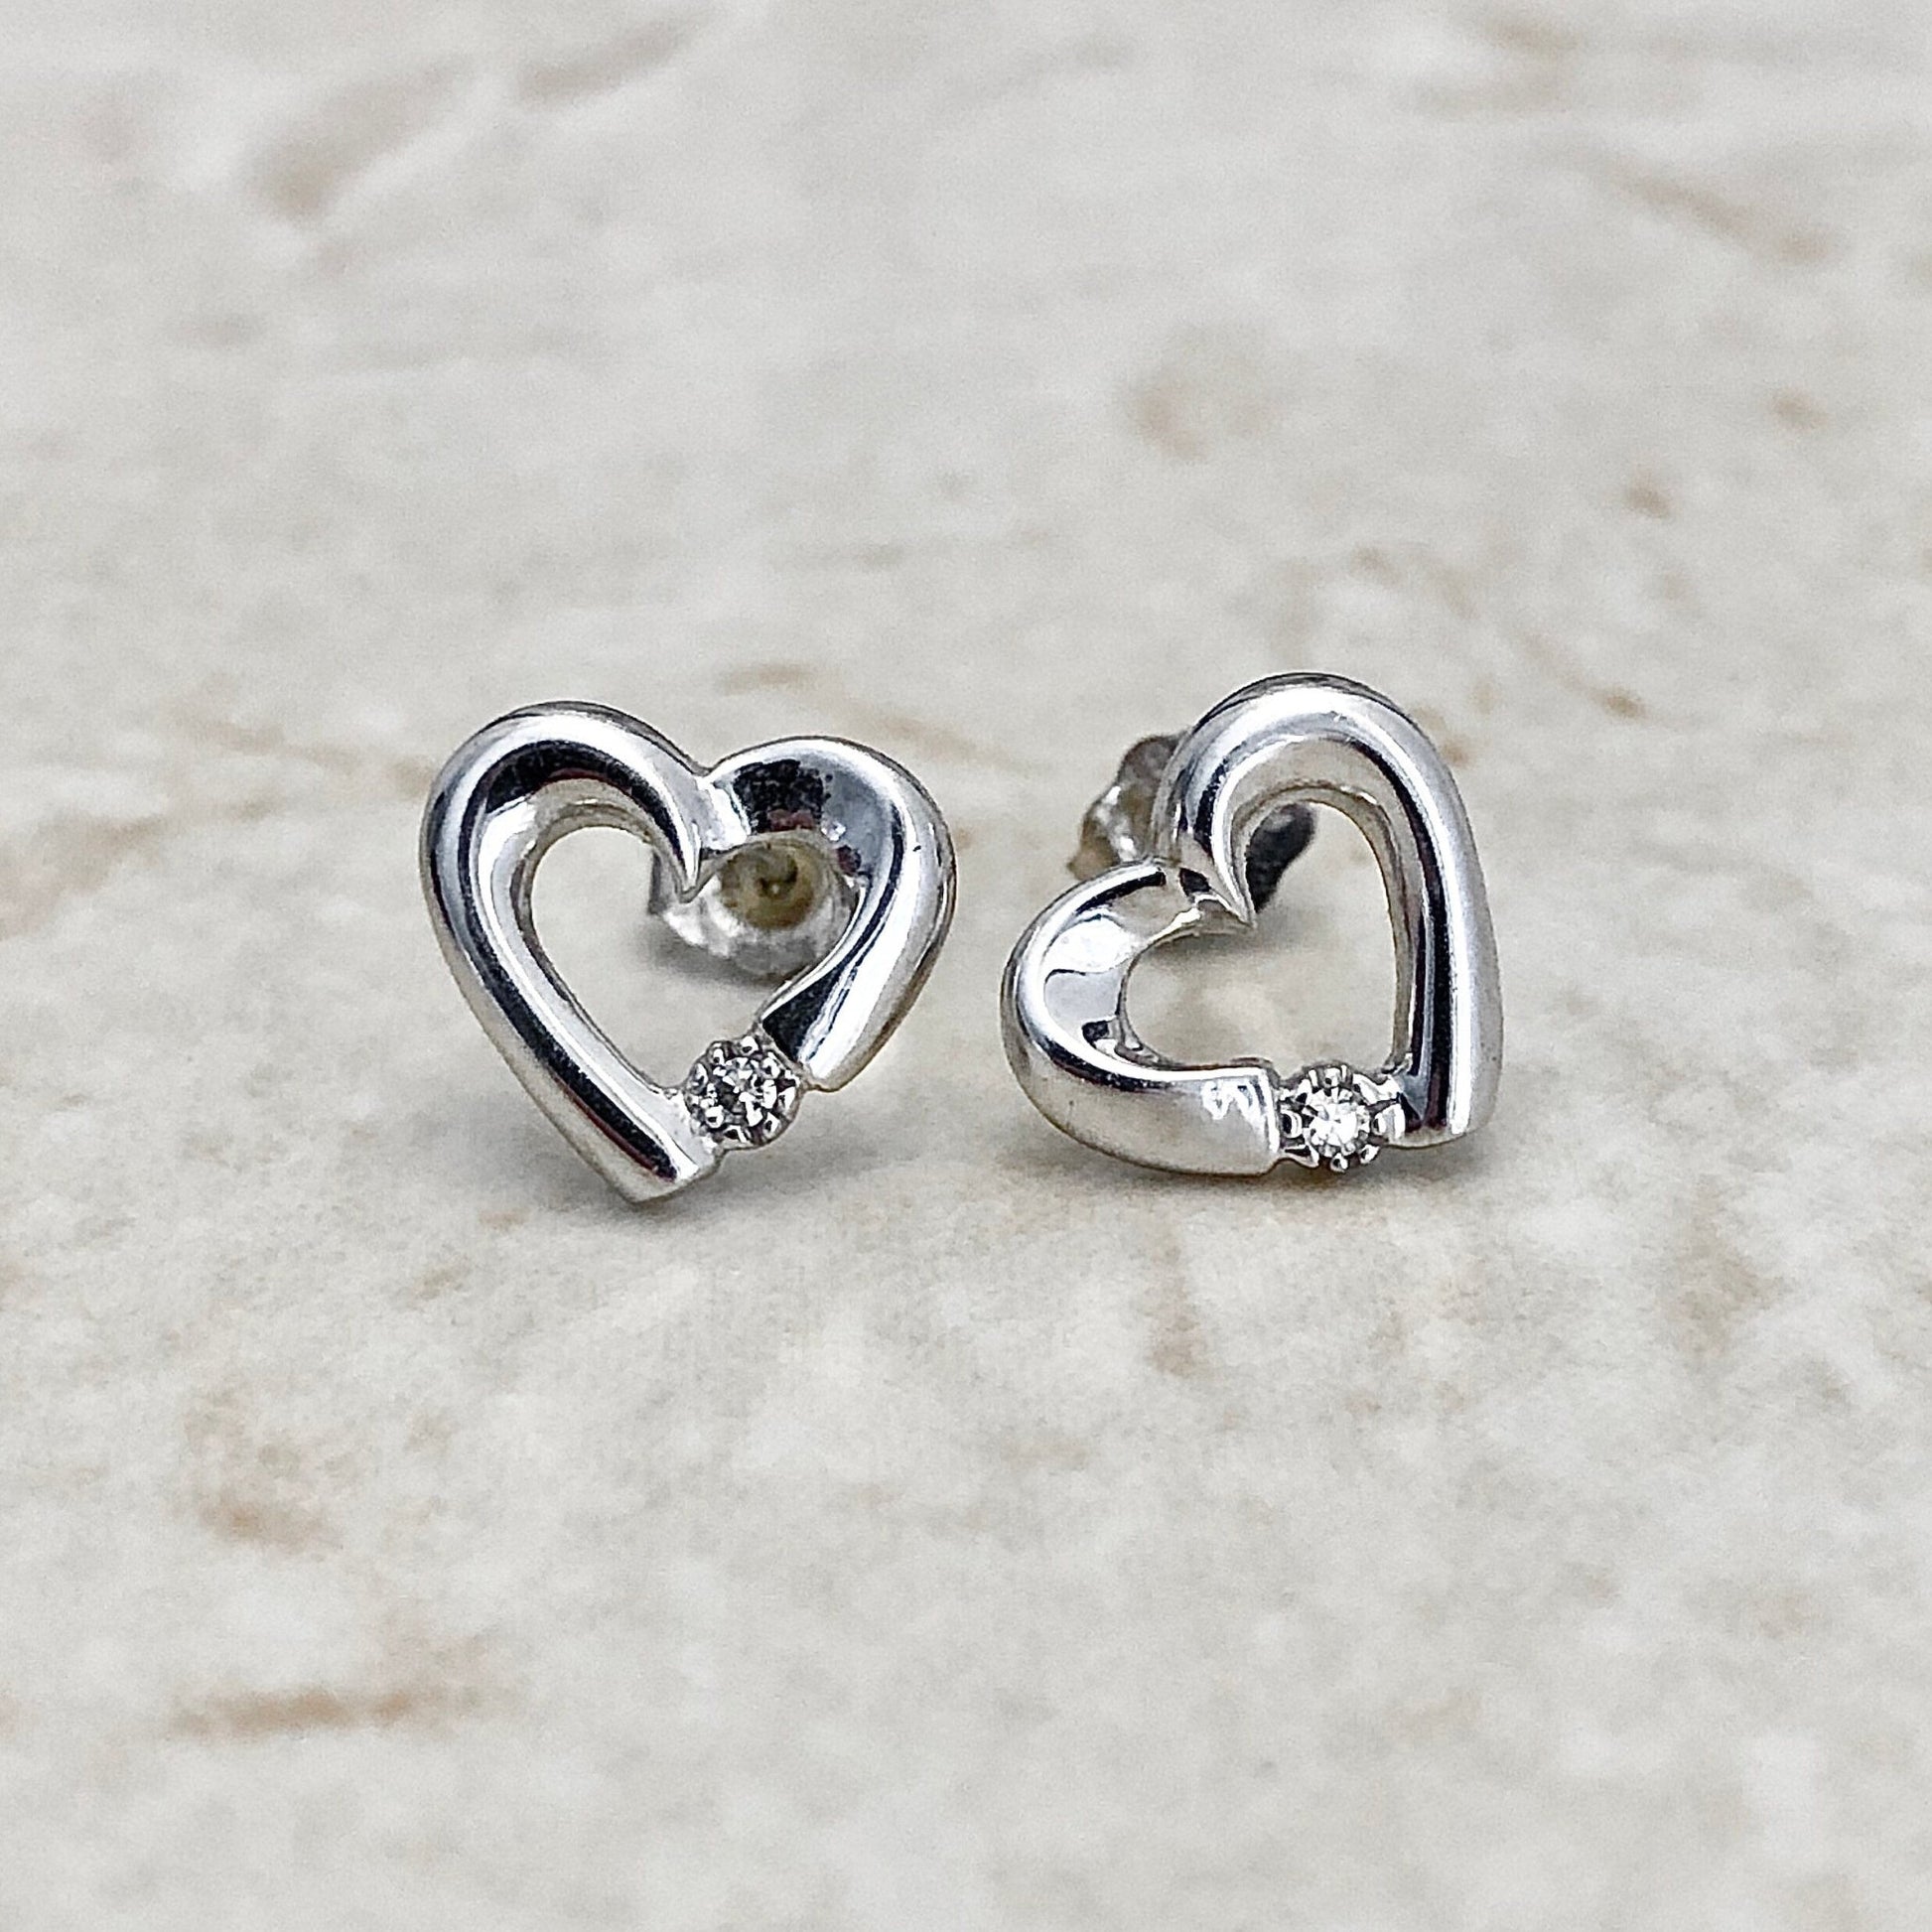 Diamond Heart Stud Earrings - 14 Karat White Gold - Diamond Studs - Love Jewelry - Birthday Gift